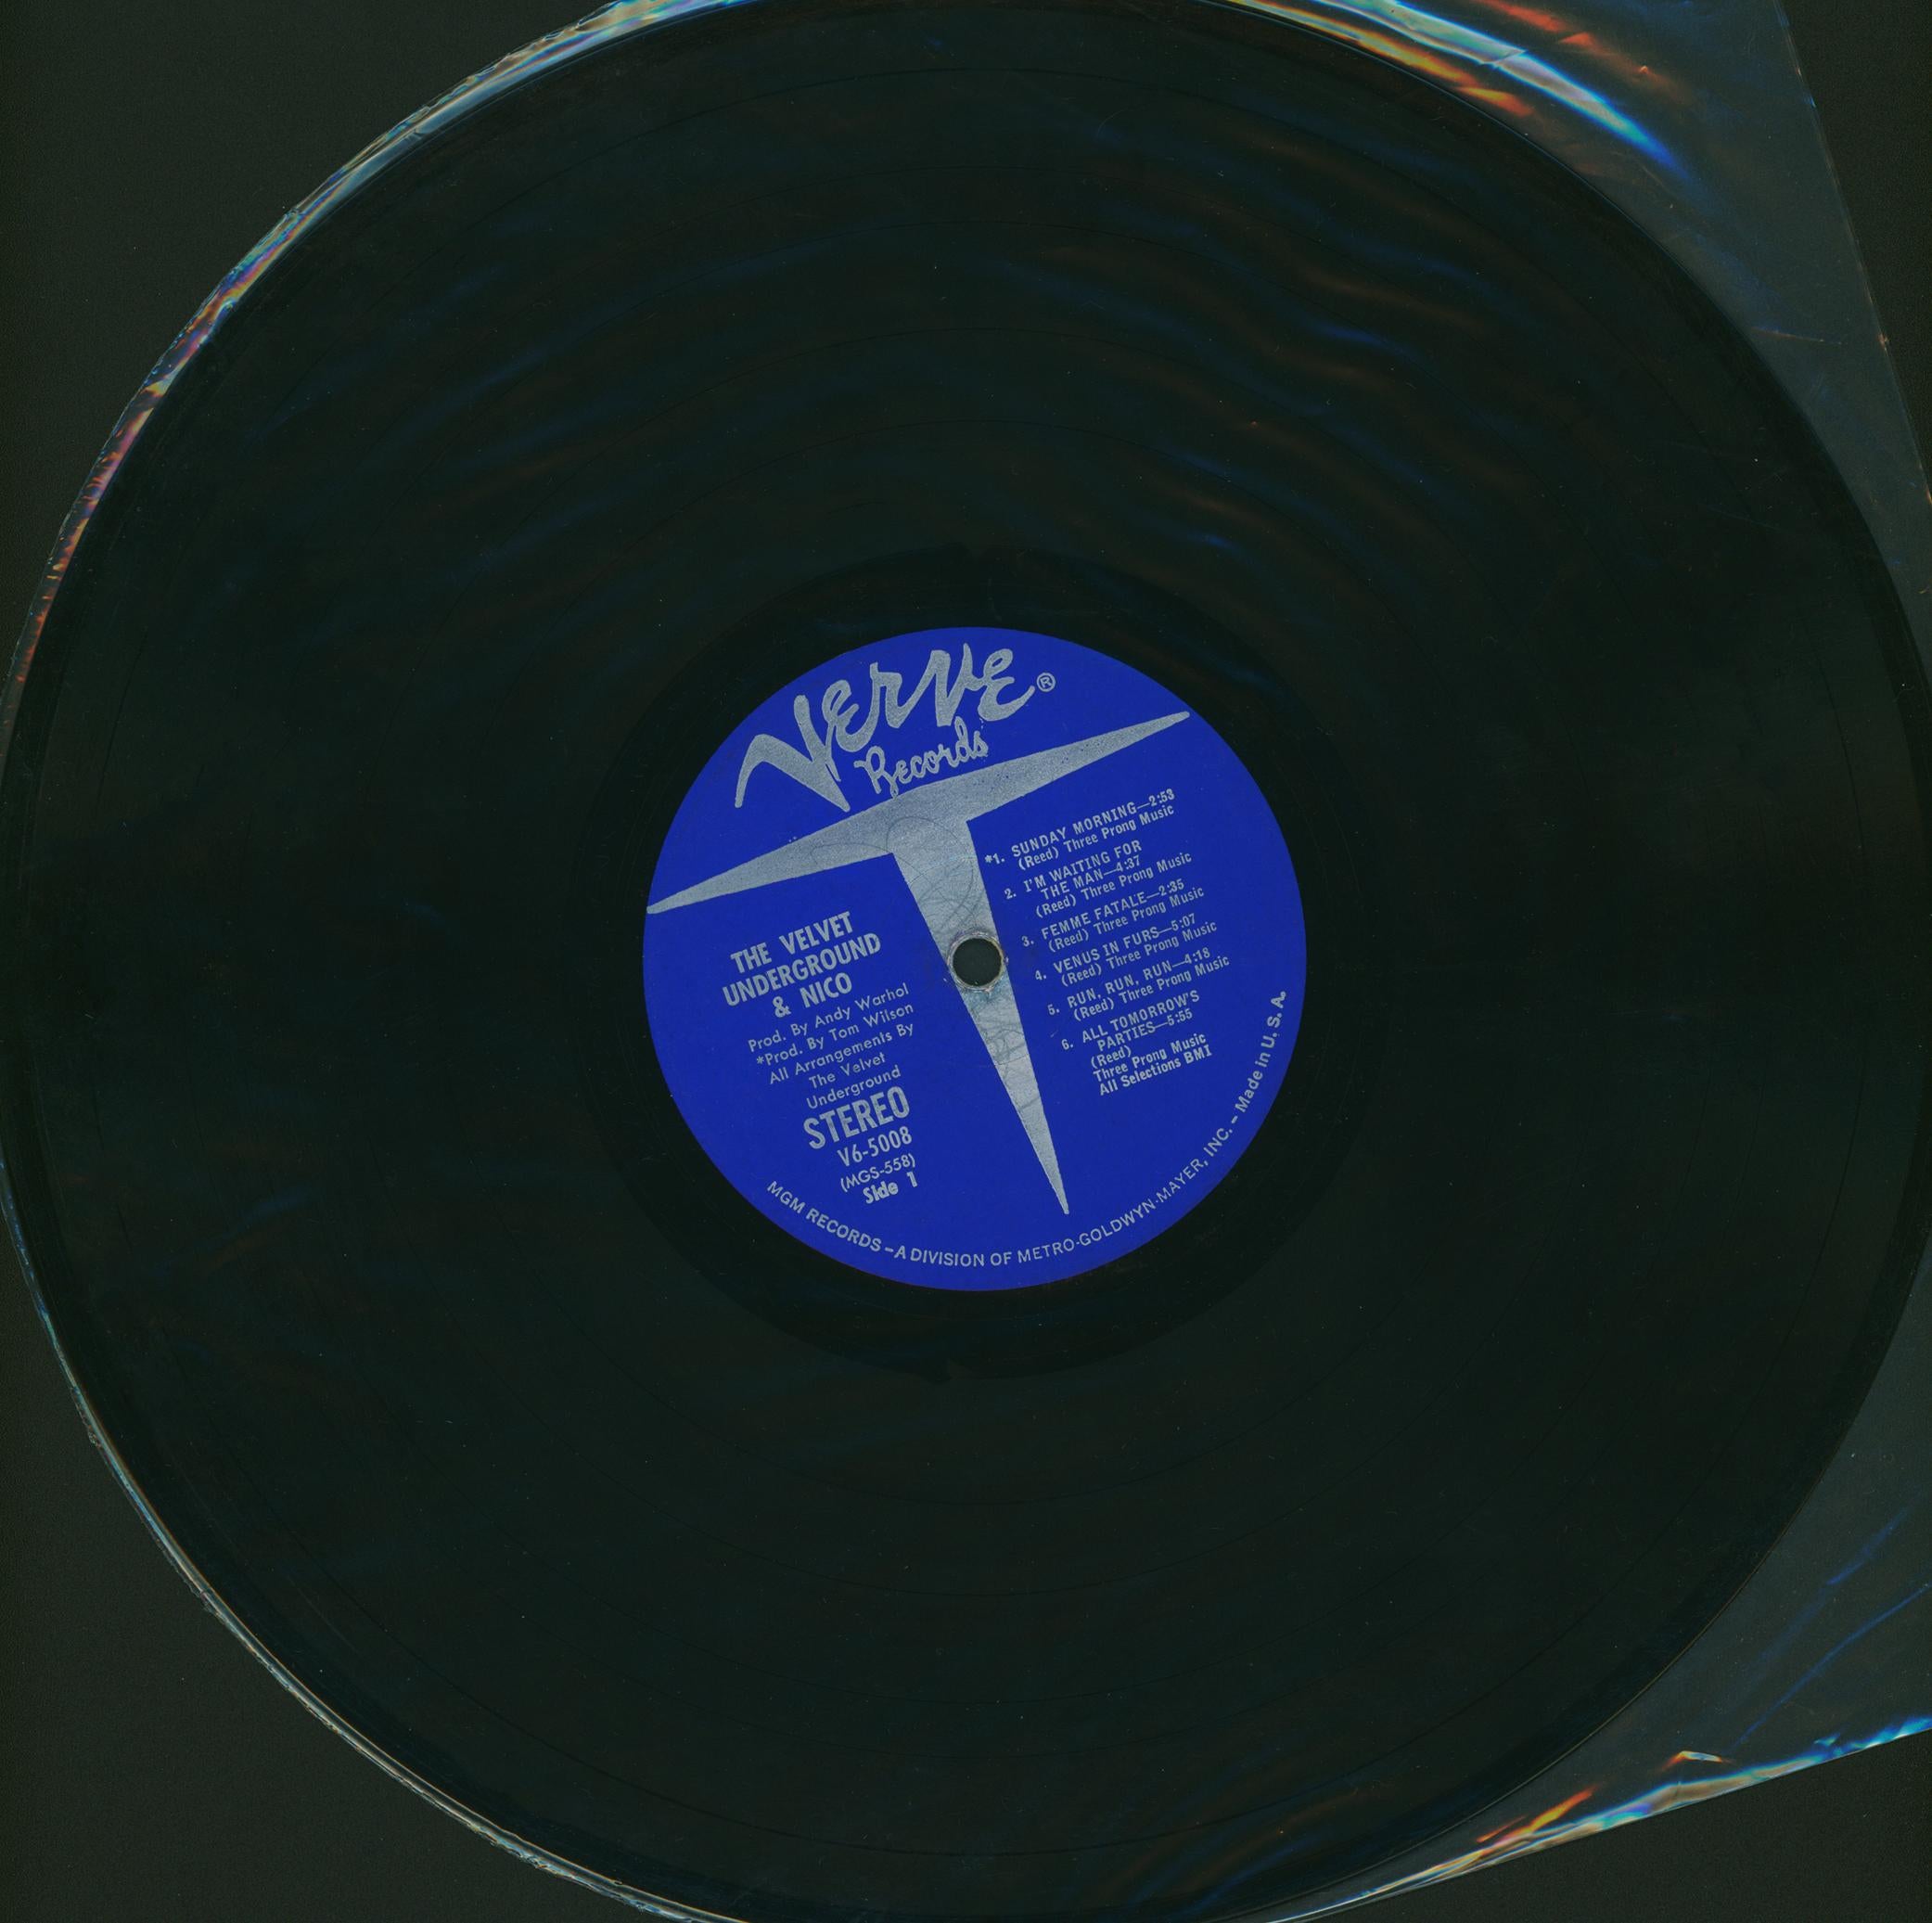 Andy Warhol Banana: Nico & The Velvet Underground Vinyl Record (set of 4 works) 7